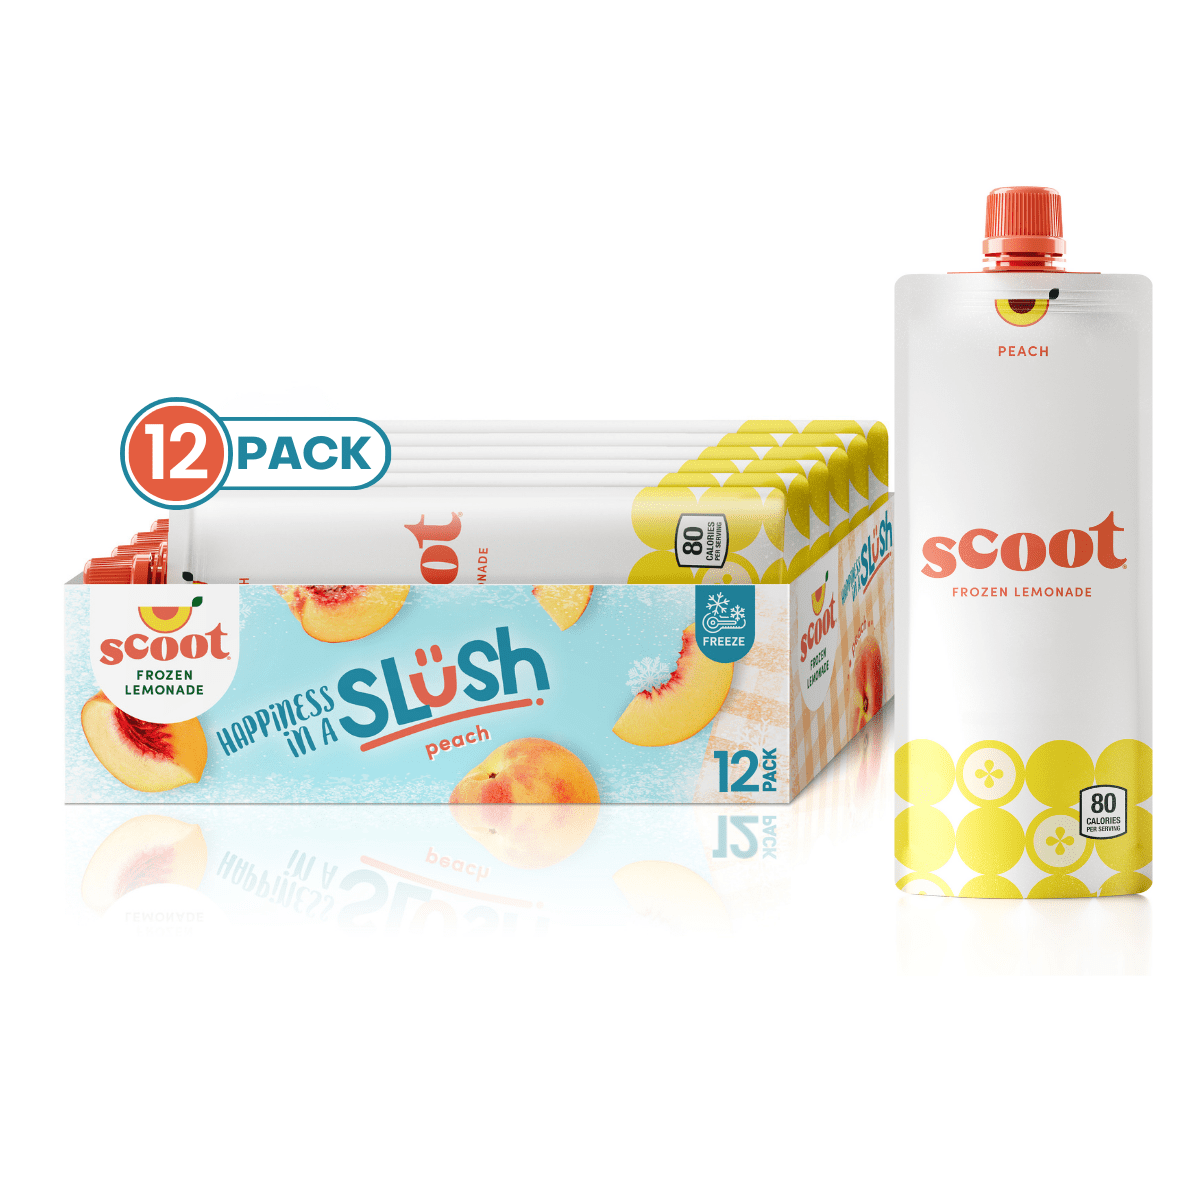 Scoot Frozen Lemonade 12 Pack: Peach Flavor 12 Shelf-Stable Pouches of ...